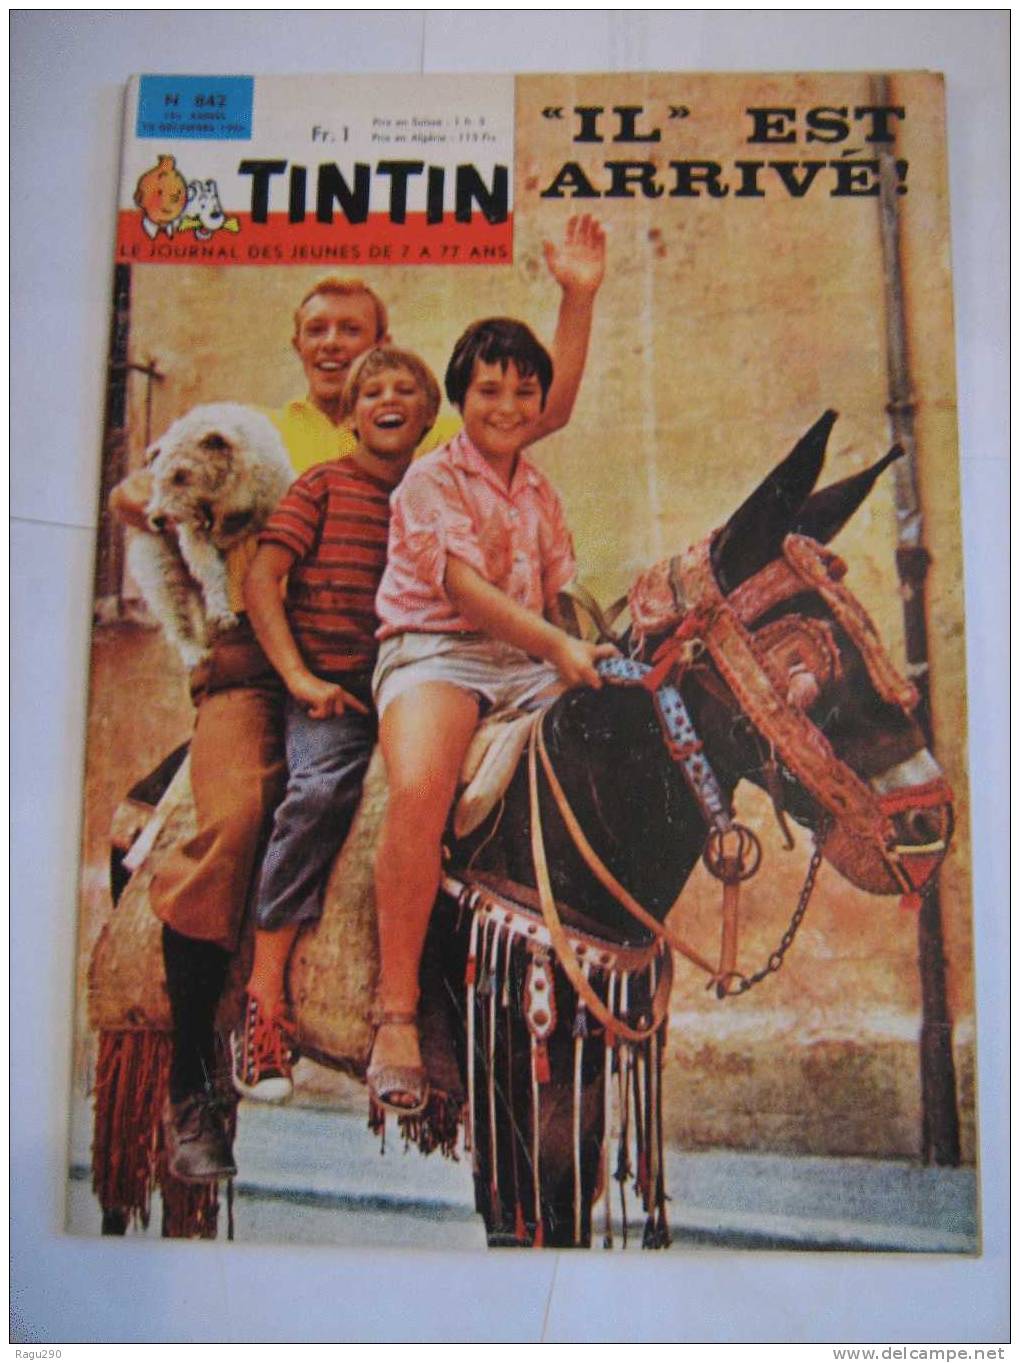 TINTIN N° 842 - Tintin